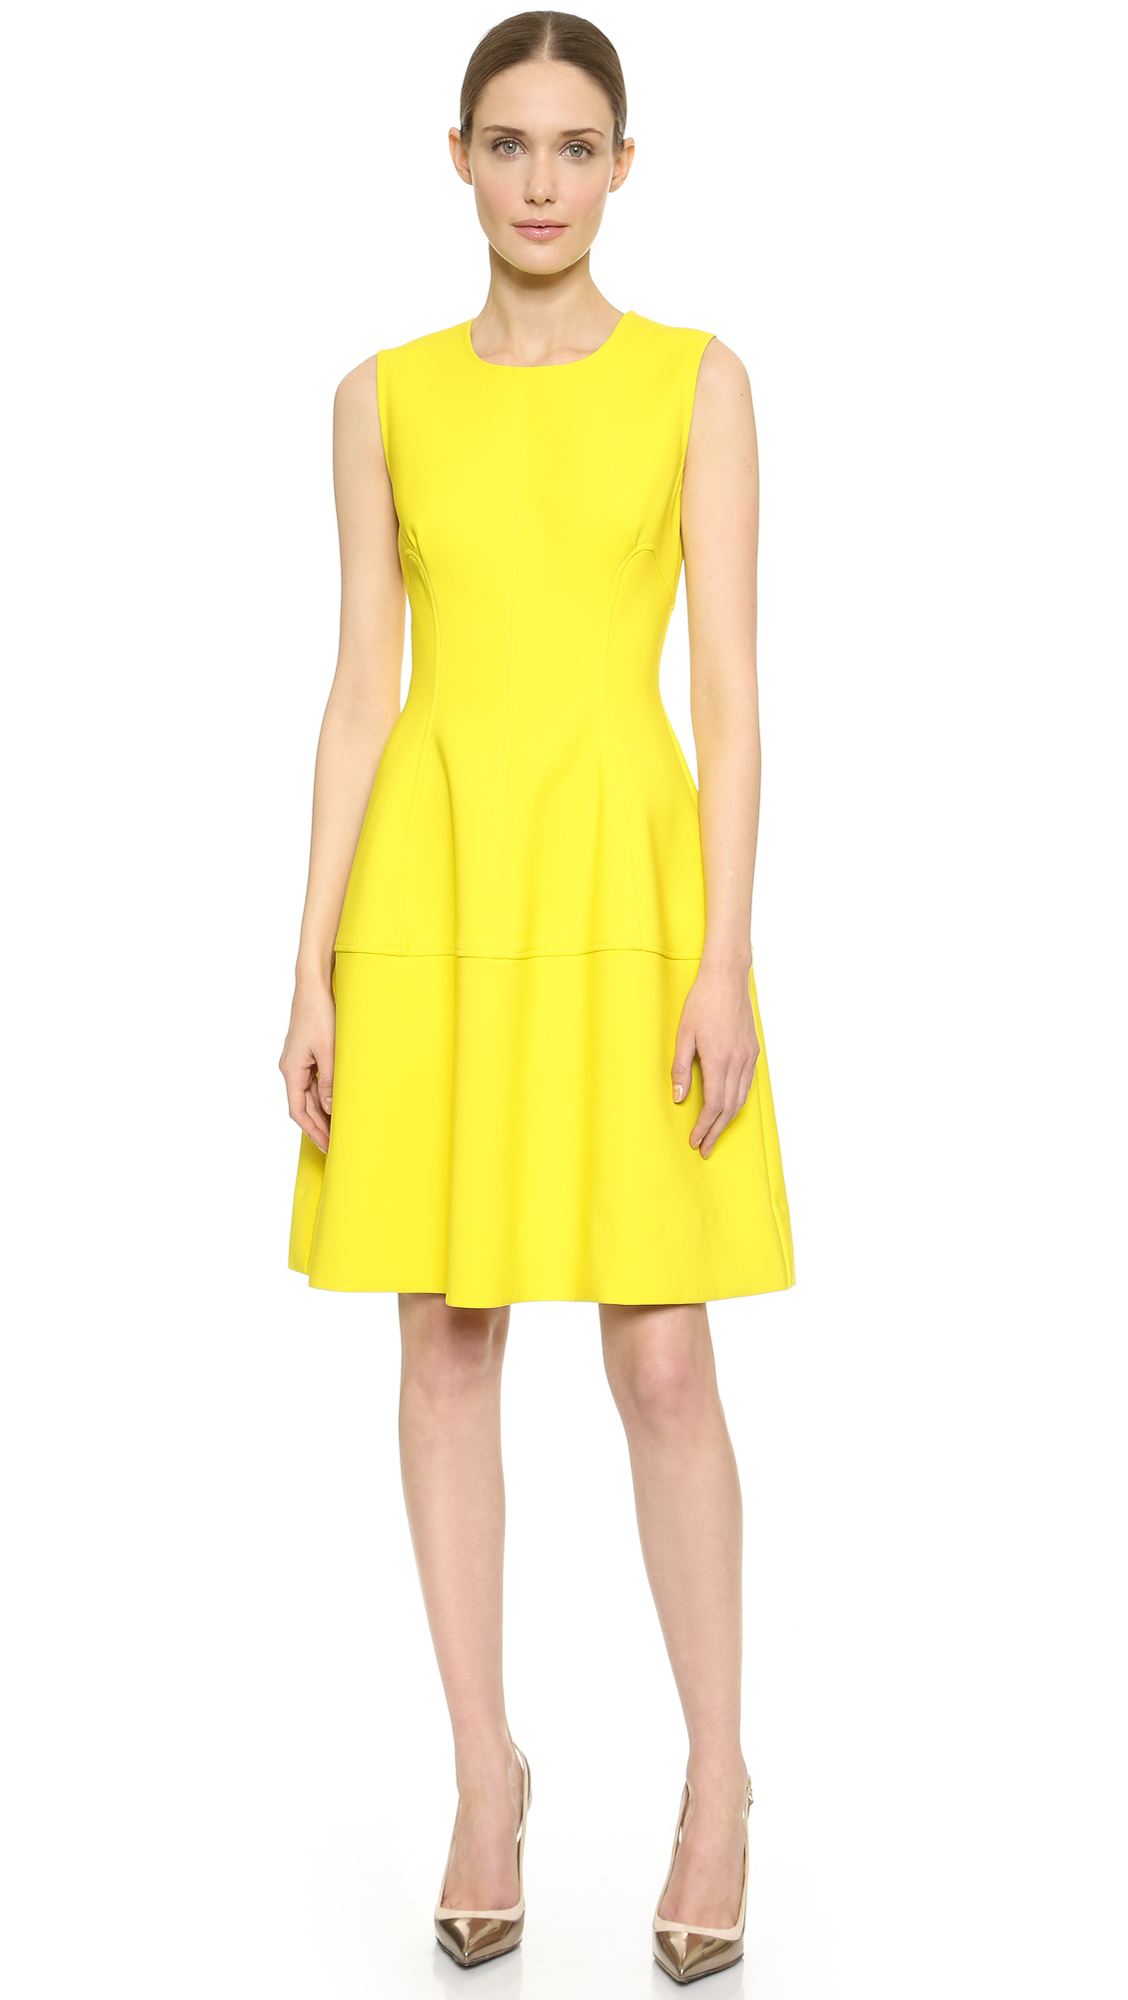 Lela rose Seamed Sheath Dress - Citrine in Yellow | Lyst